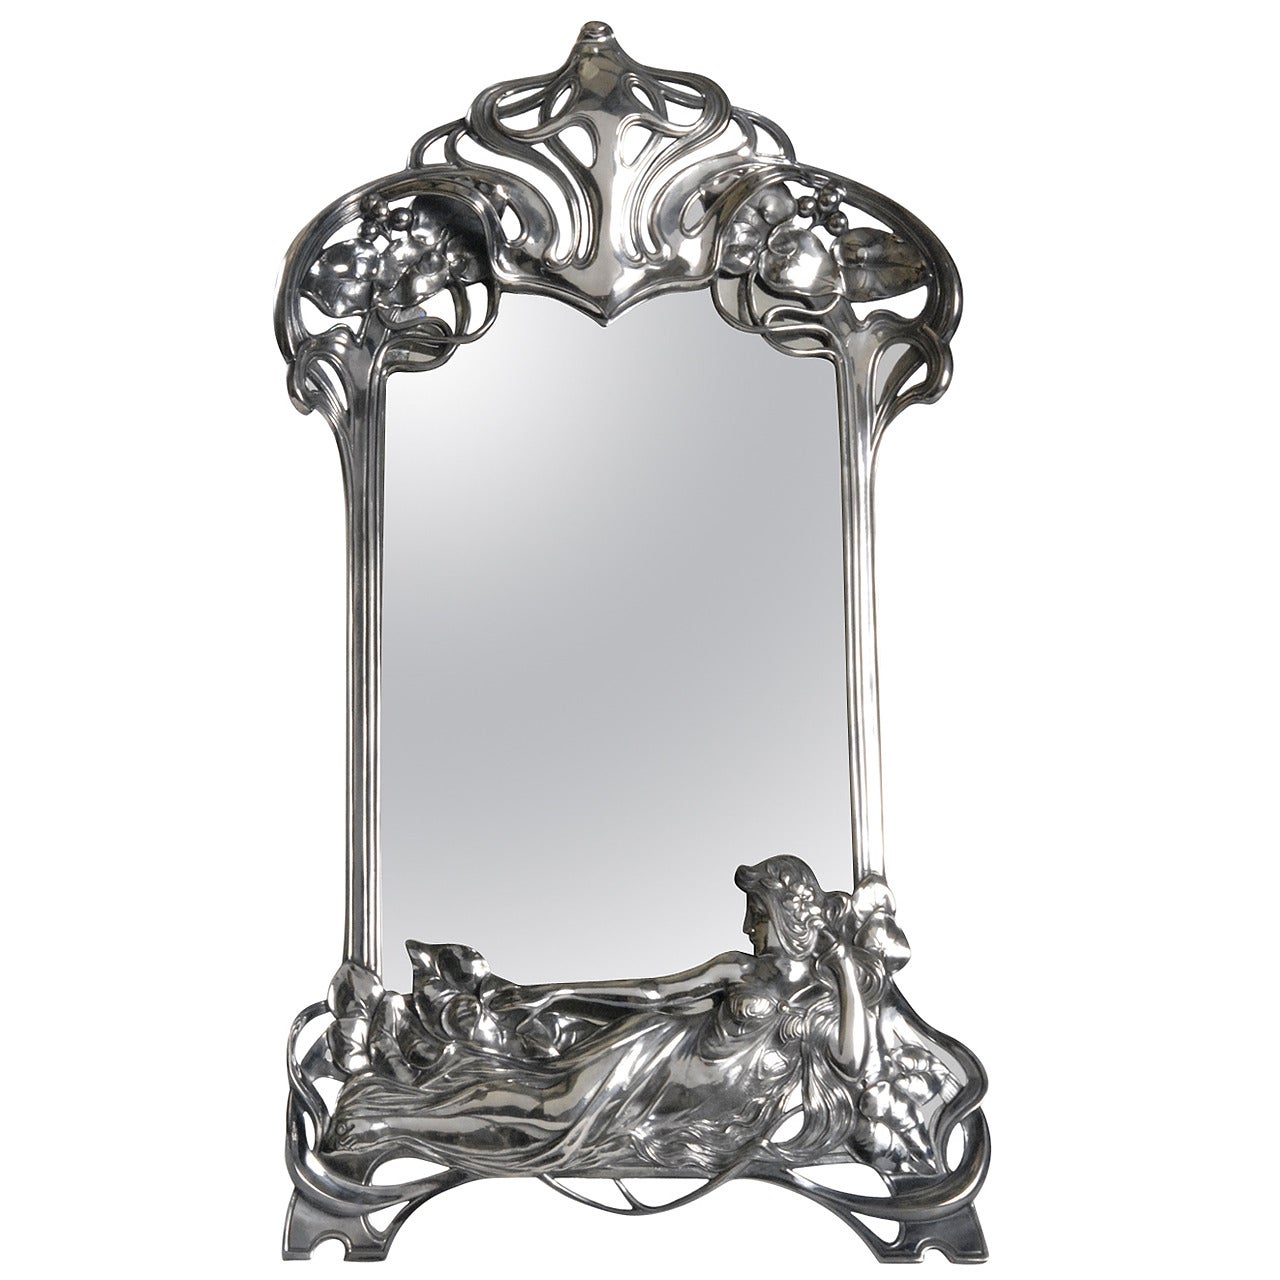 Art Nouveau WMF Silver Plated Toilet Mirror, circa 1906